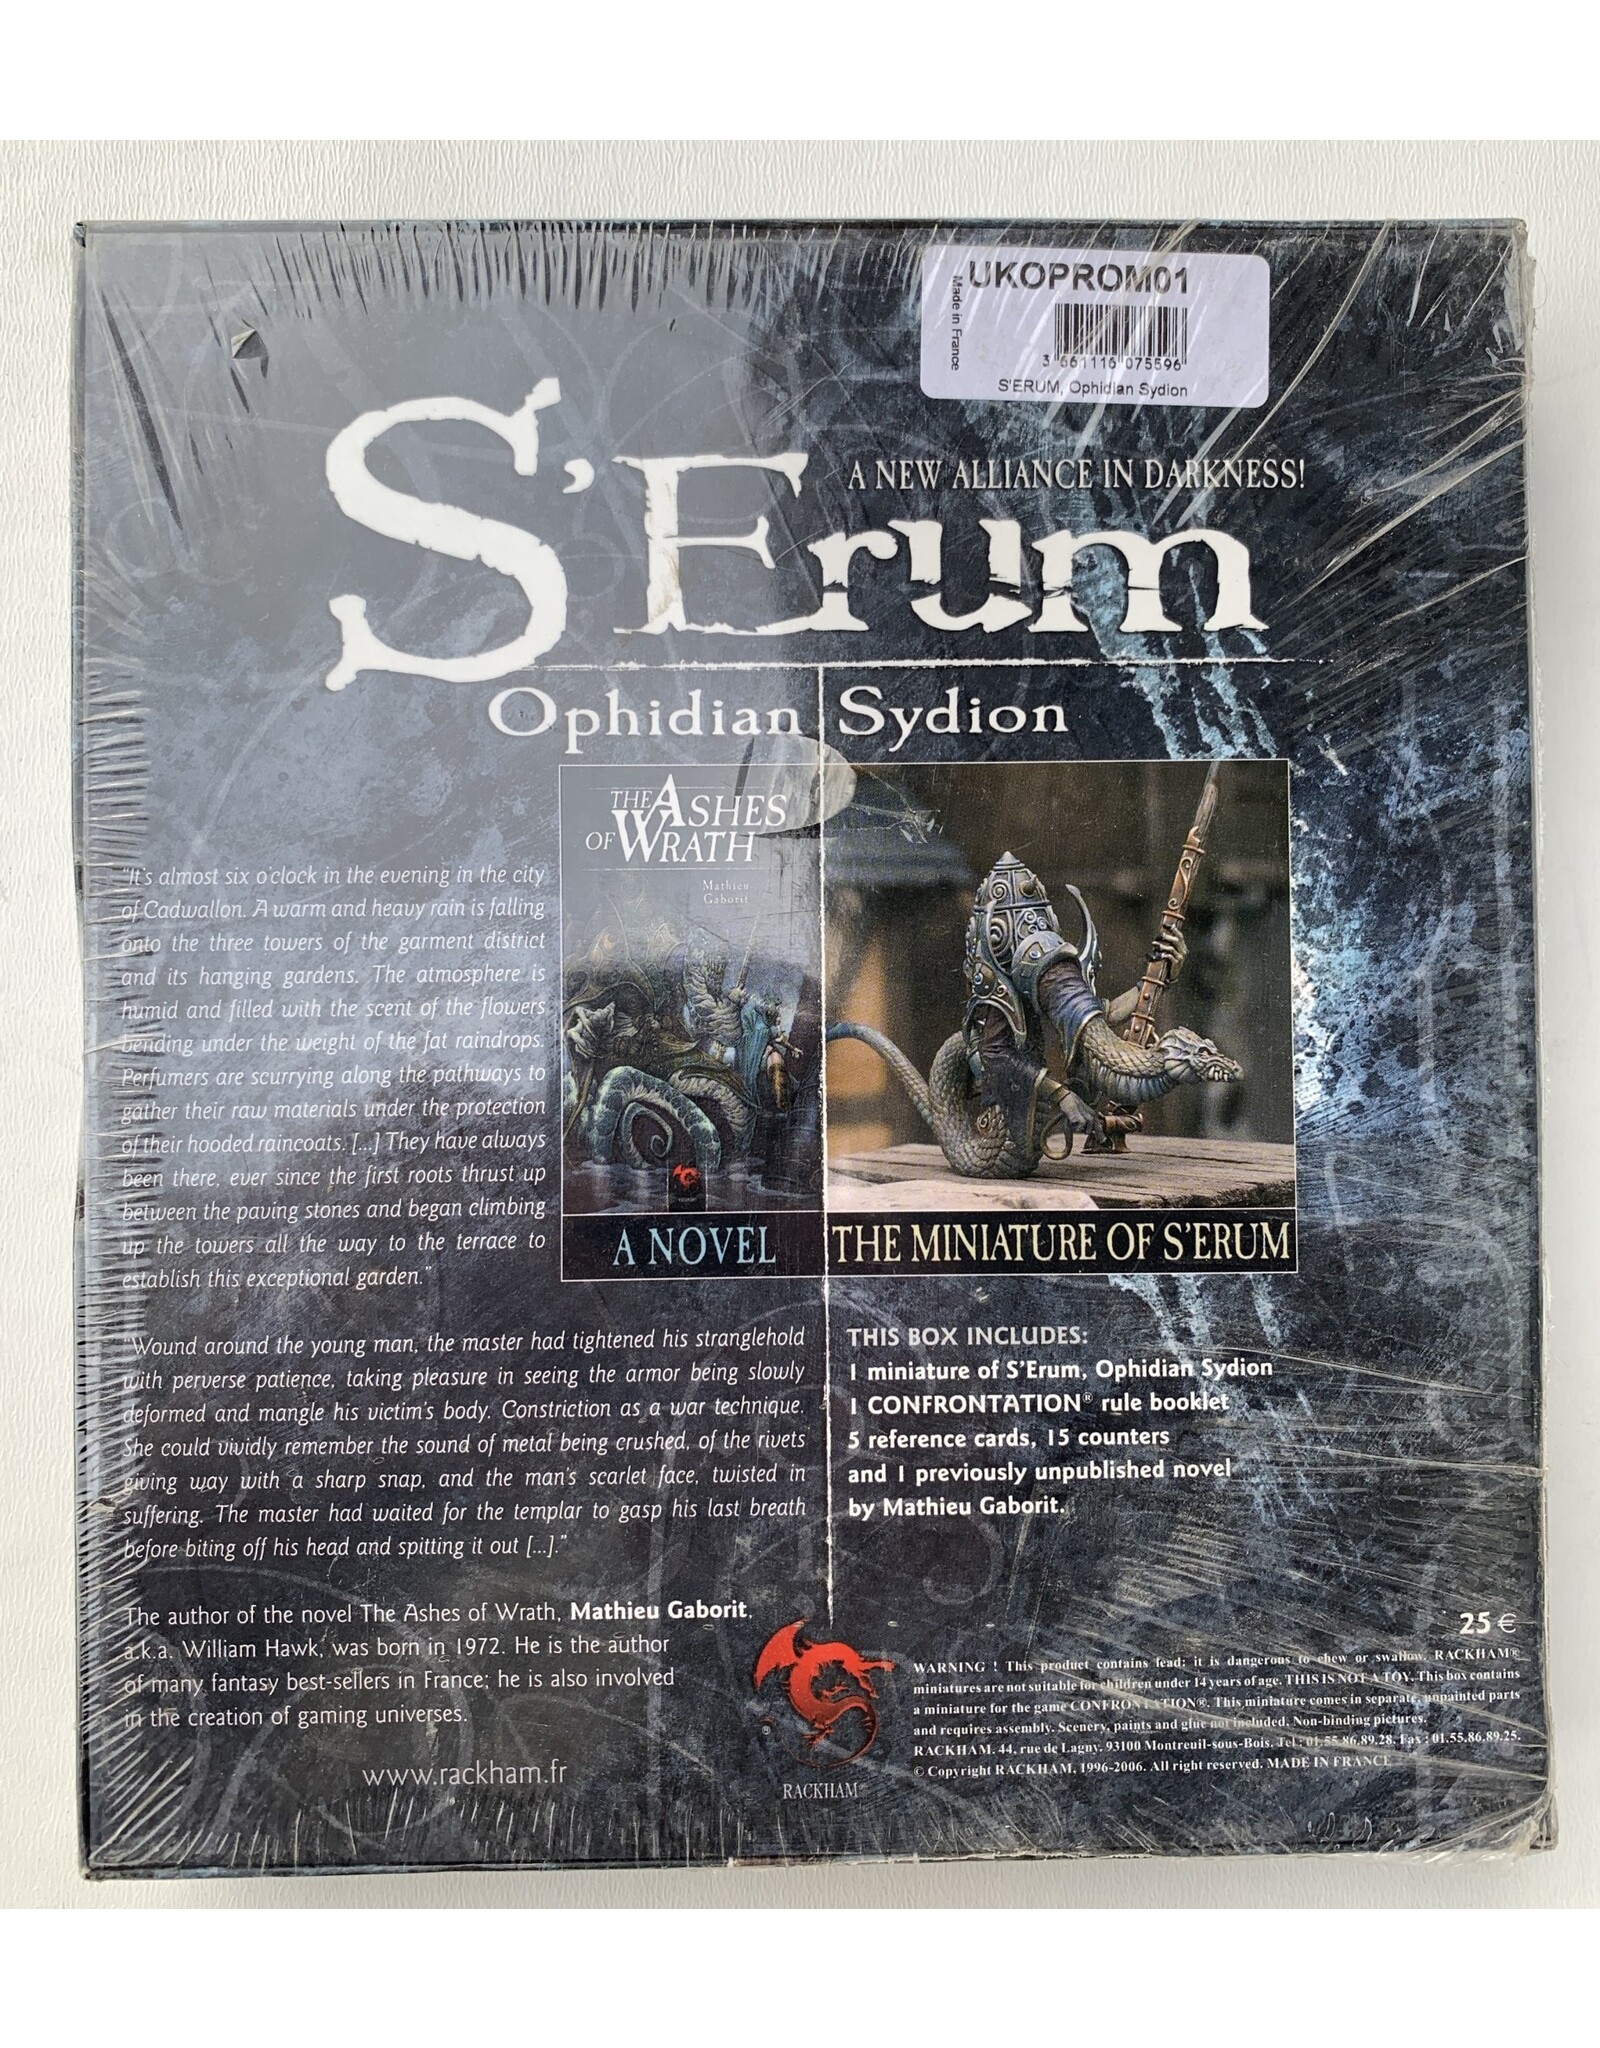 Rackham S'Erum, Ophidian Sydion (2006) NIS